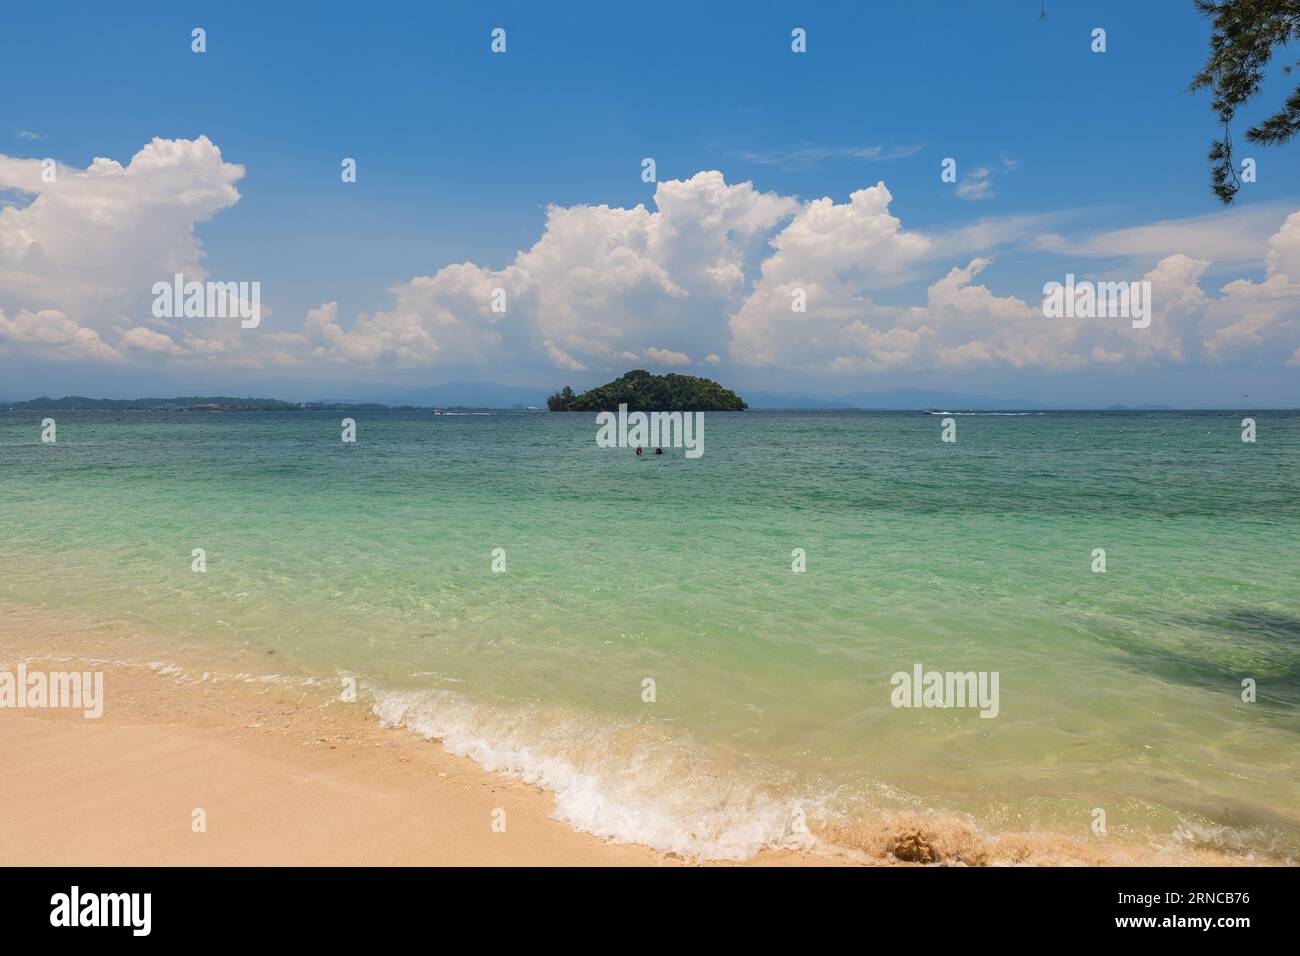 Landschaft der Insel Manukan, einer Insel des Nationalparks Tunku Abdul Rahman in Sabah, Malaysia Stockfoto